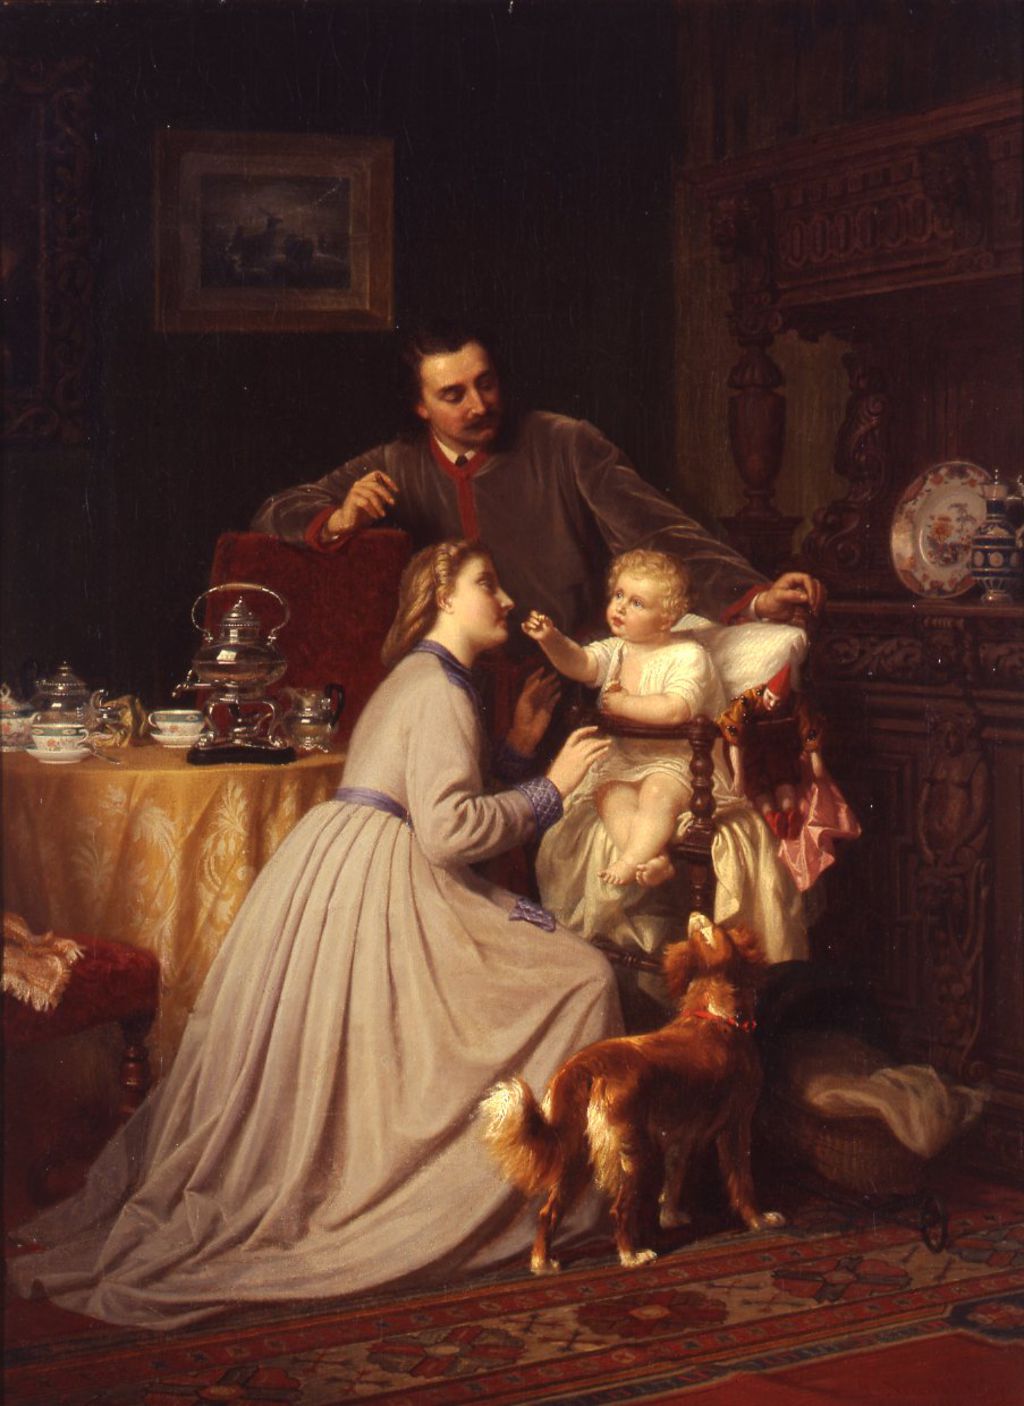 Exponat: Gemäde: "Familienidyll", 1868